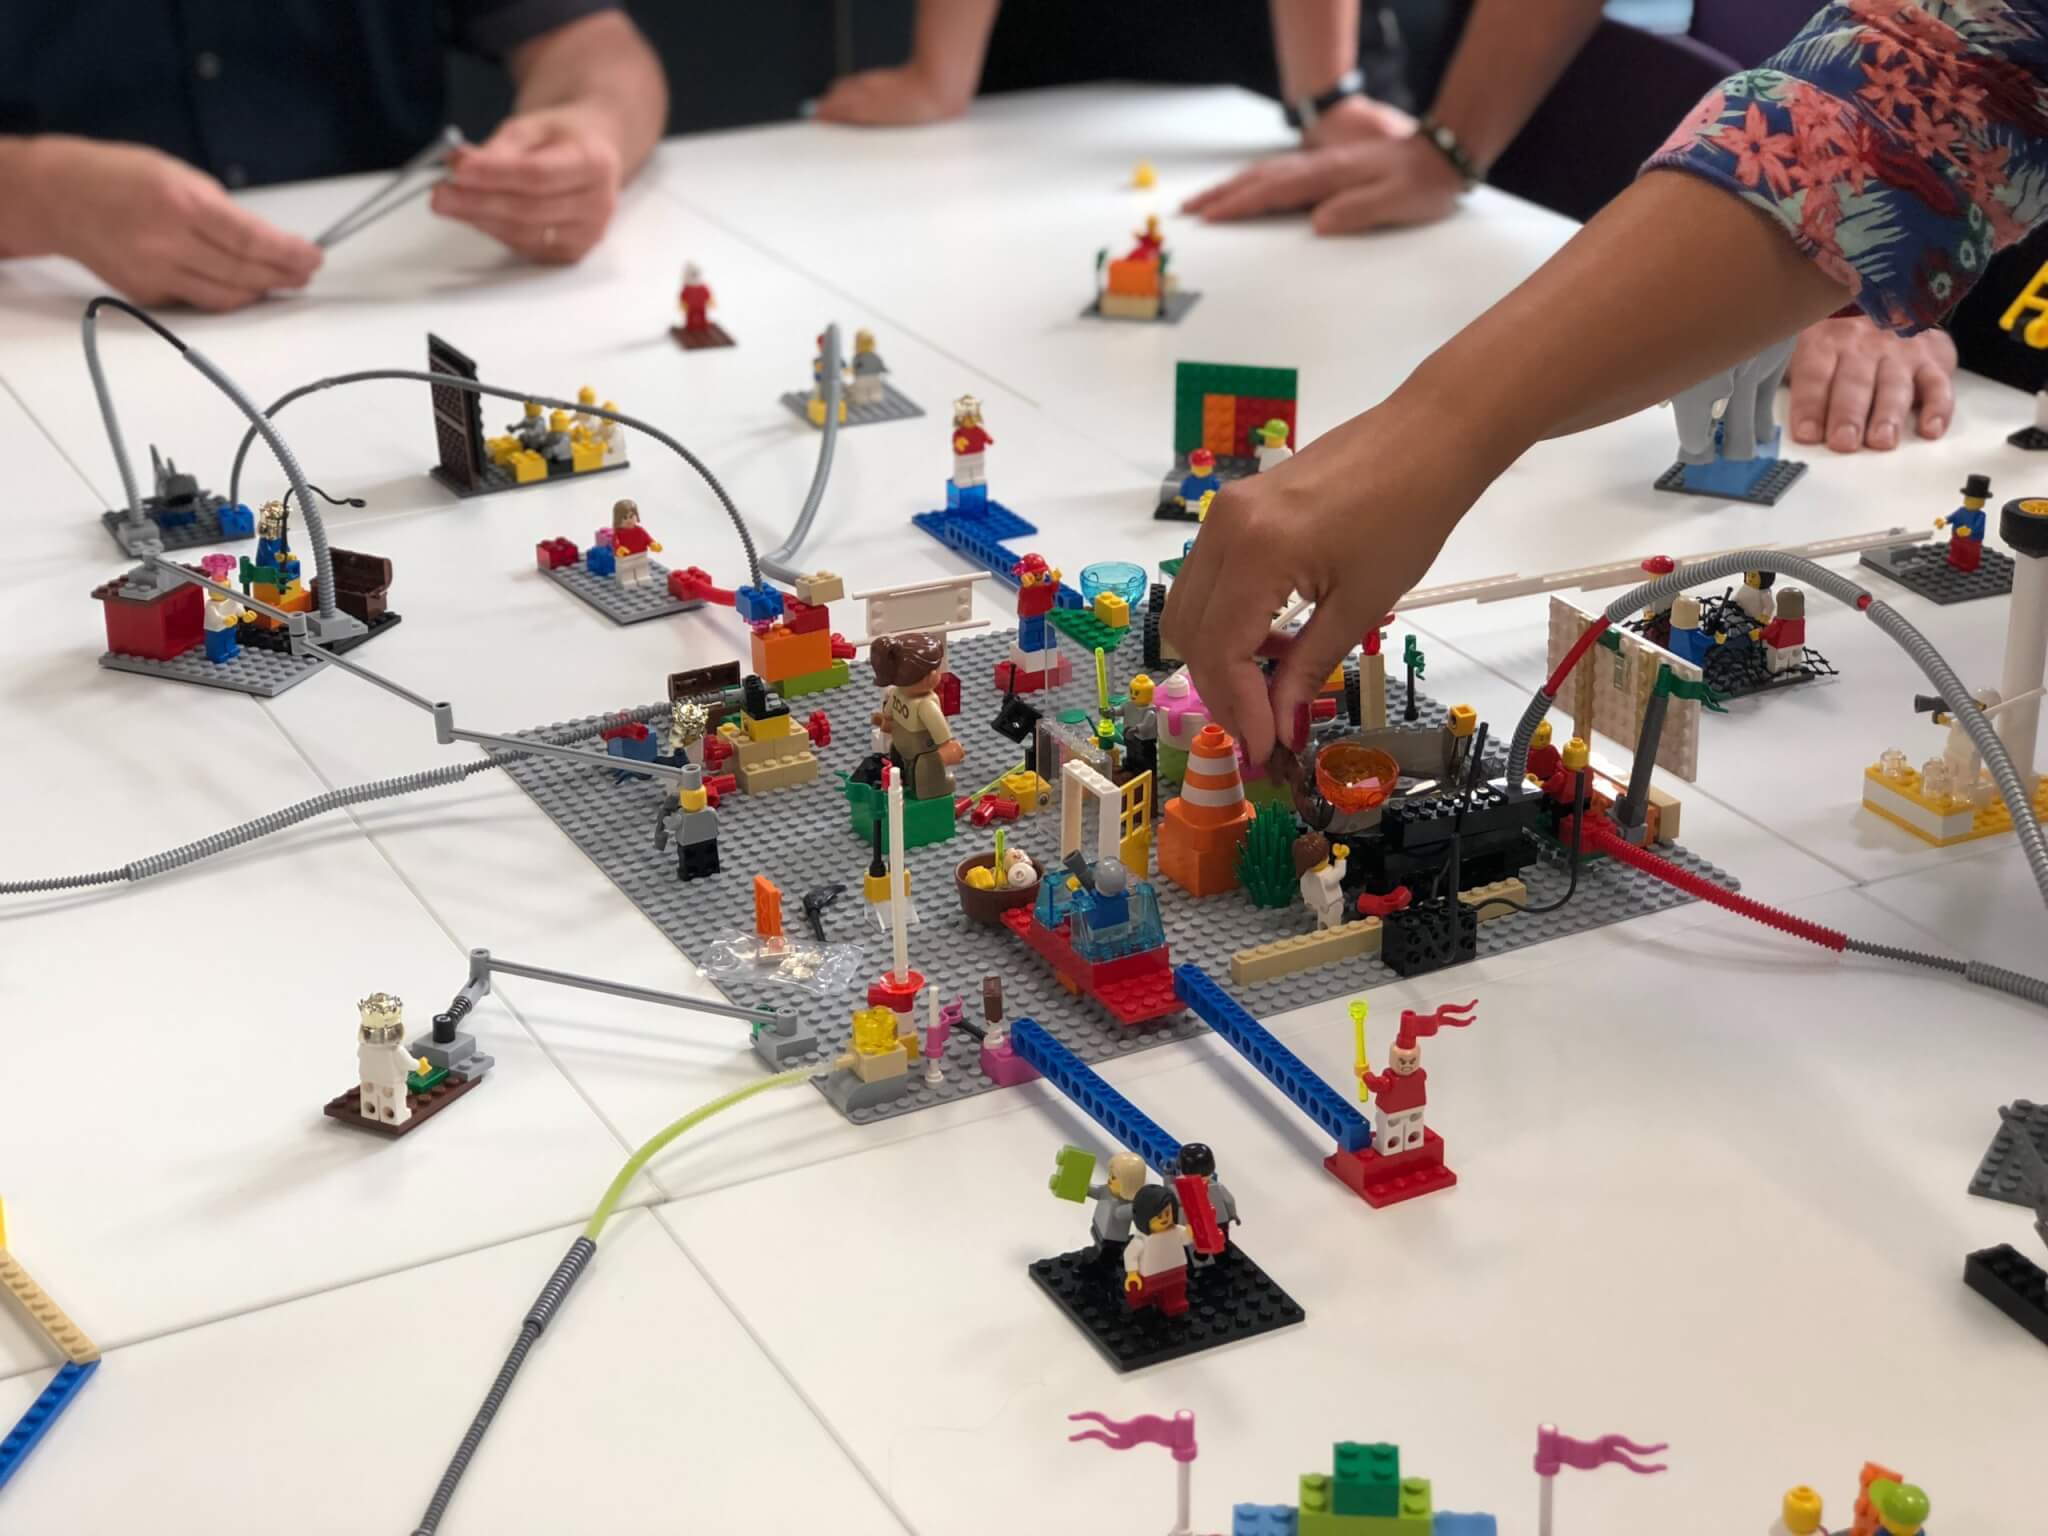 Lego city toys on table